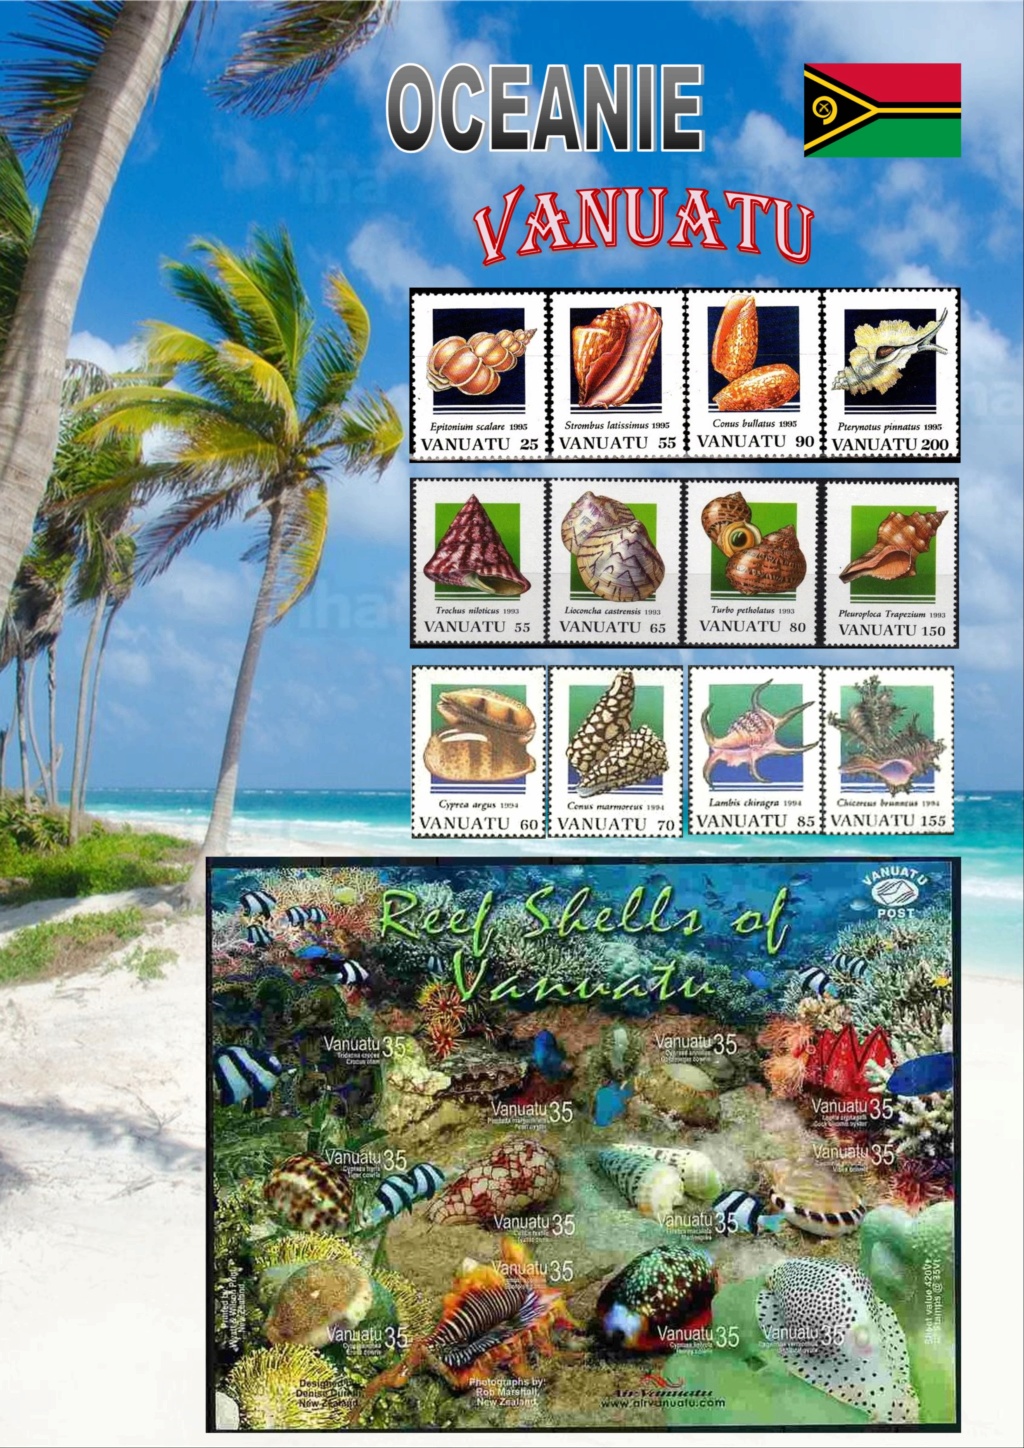 Les coquillages par les timbres - Tome OCEANIE - TUVALU P 37 & 38 - VANUATU P 39 Page0510